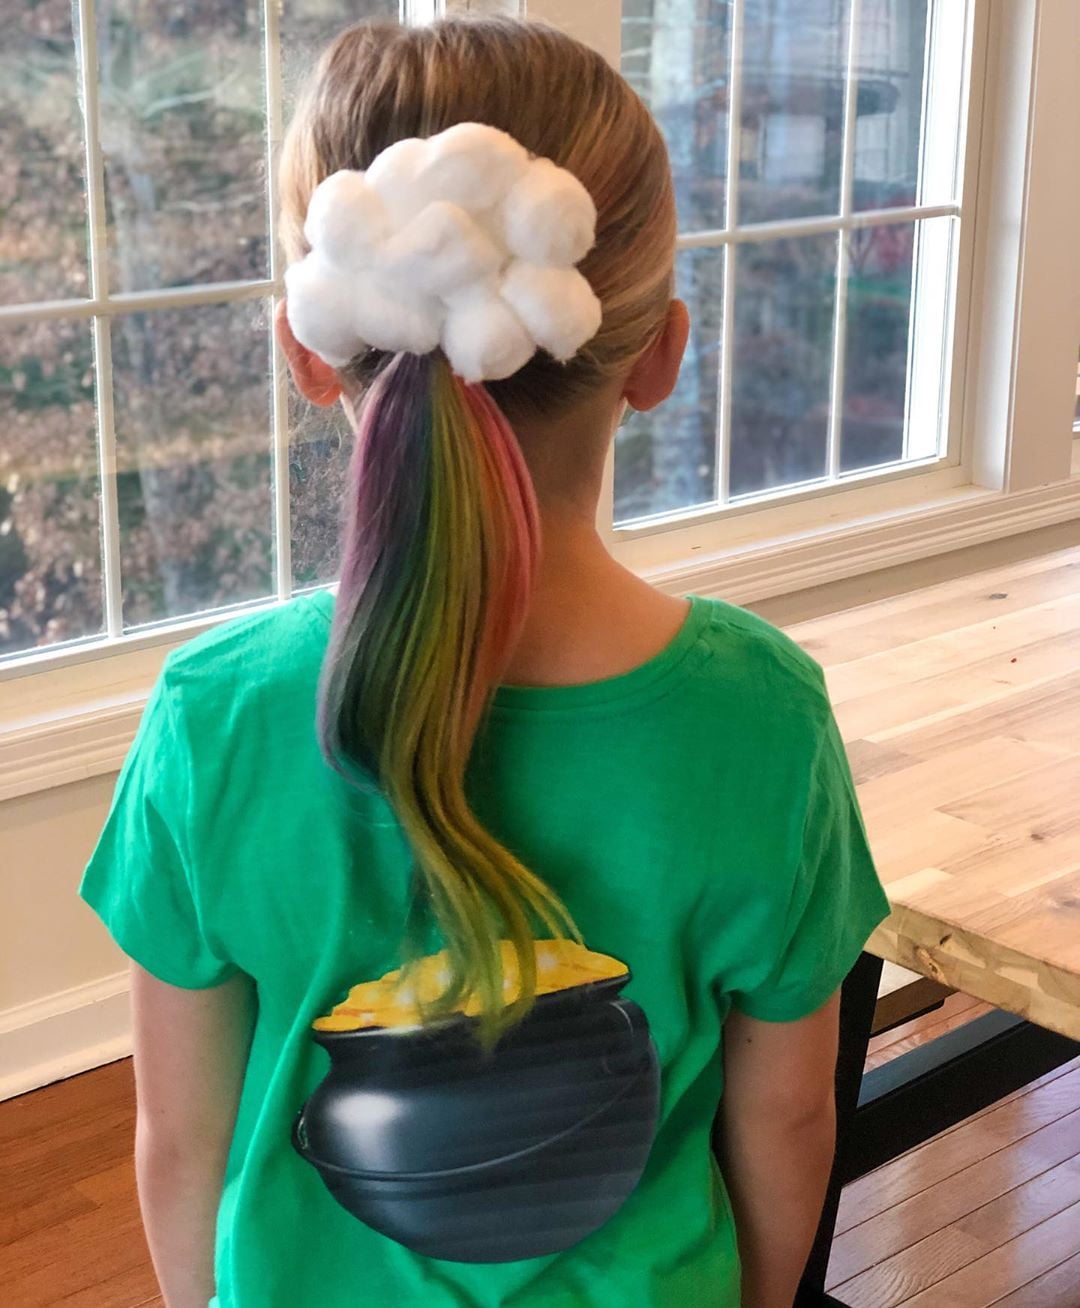 Crazy Hair Day Ideas For Your Kids' School Spirit Week | POPSUGAR Family